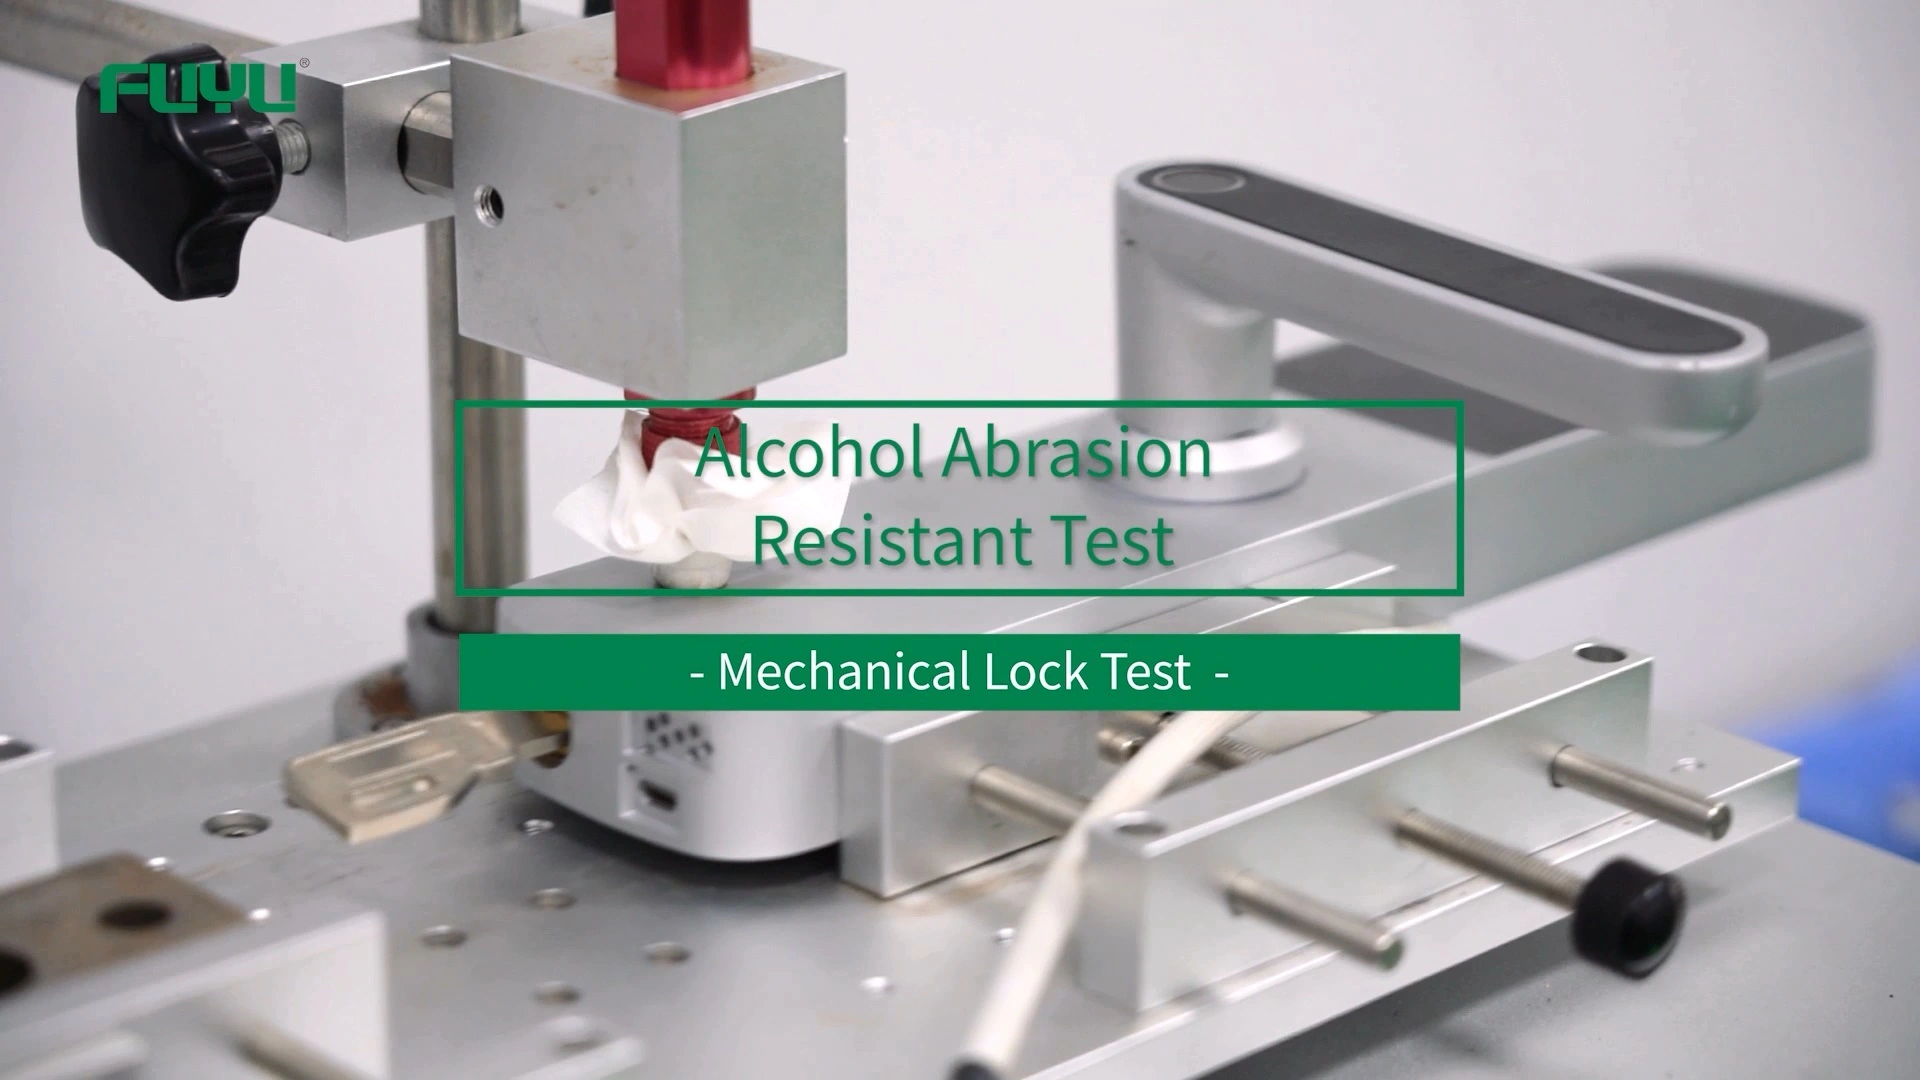 Alcohol Abrasion Resistant Test of FUYU Mechanical Lock Tests